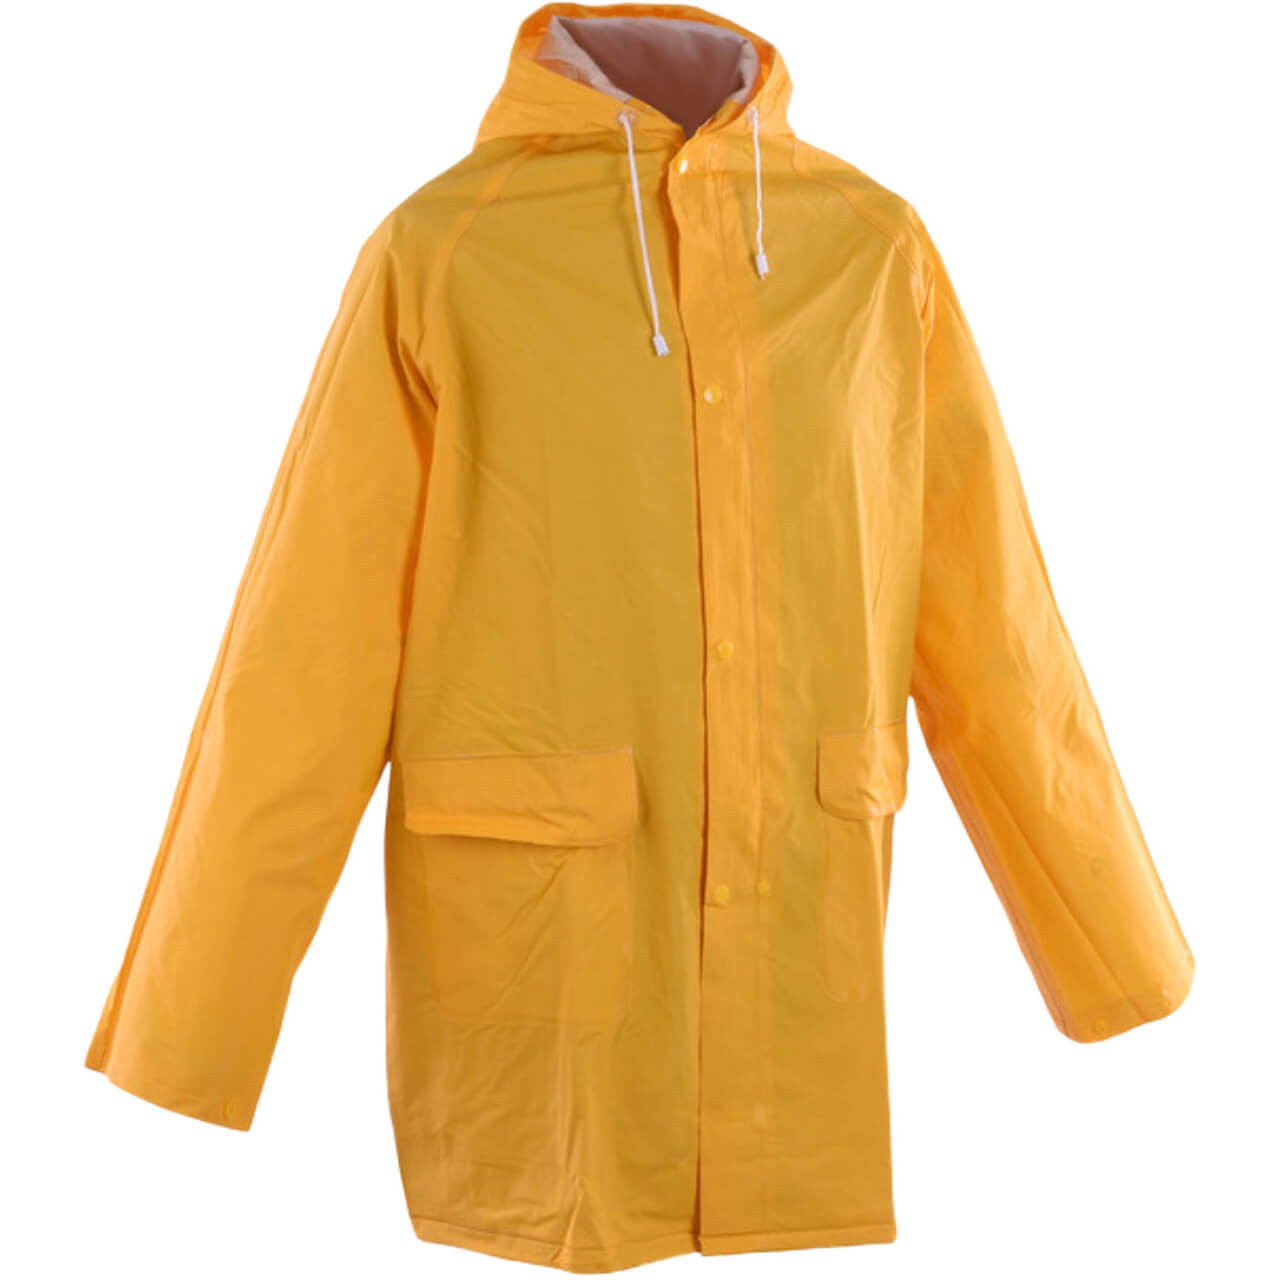 Yellow 3/4 Length PVC Rain Jacket 2XL